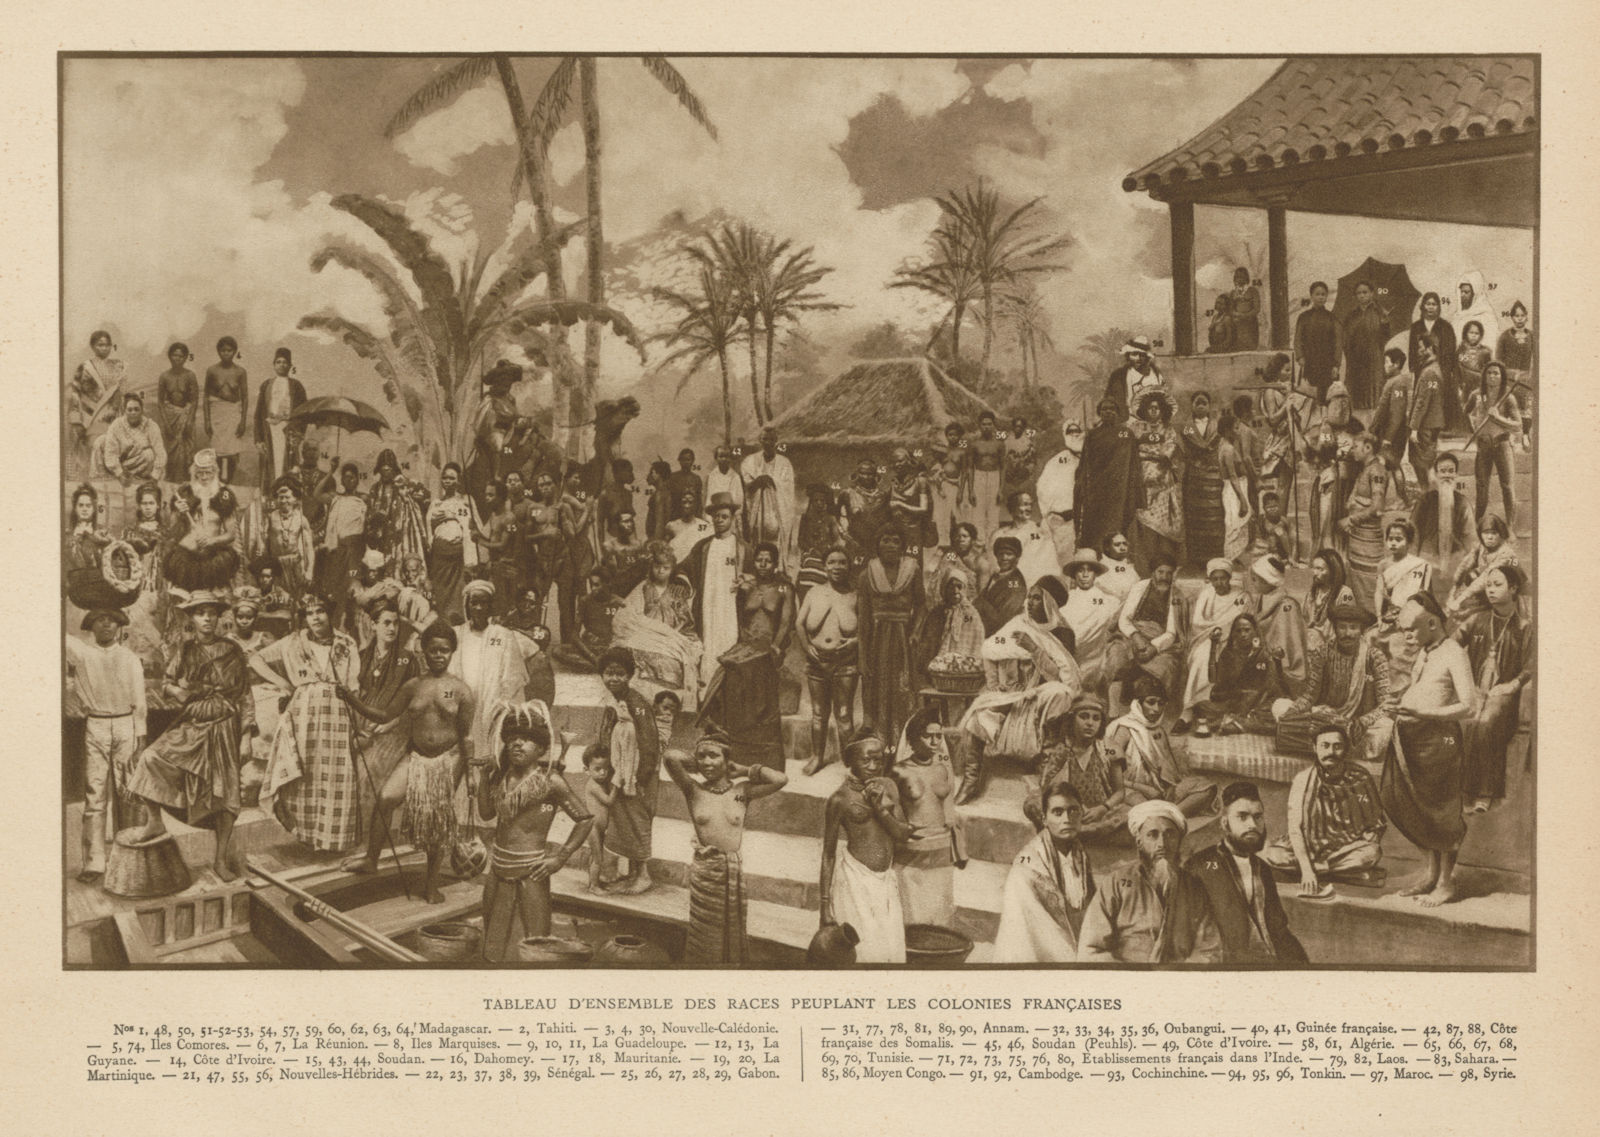 Tableau des races des colonies Francaises. People of the French colonies 1931